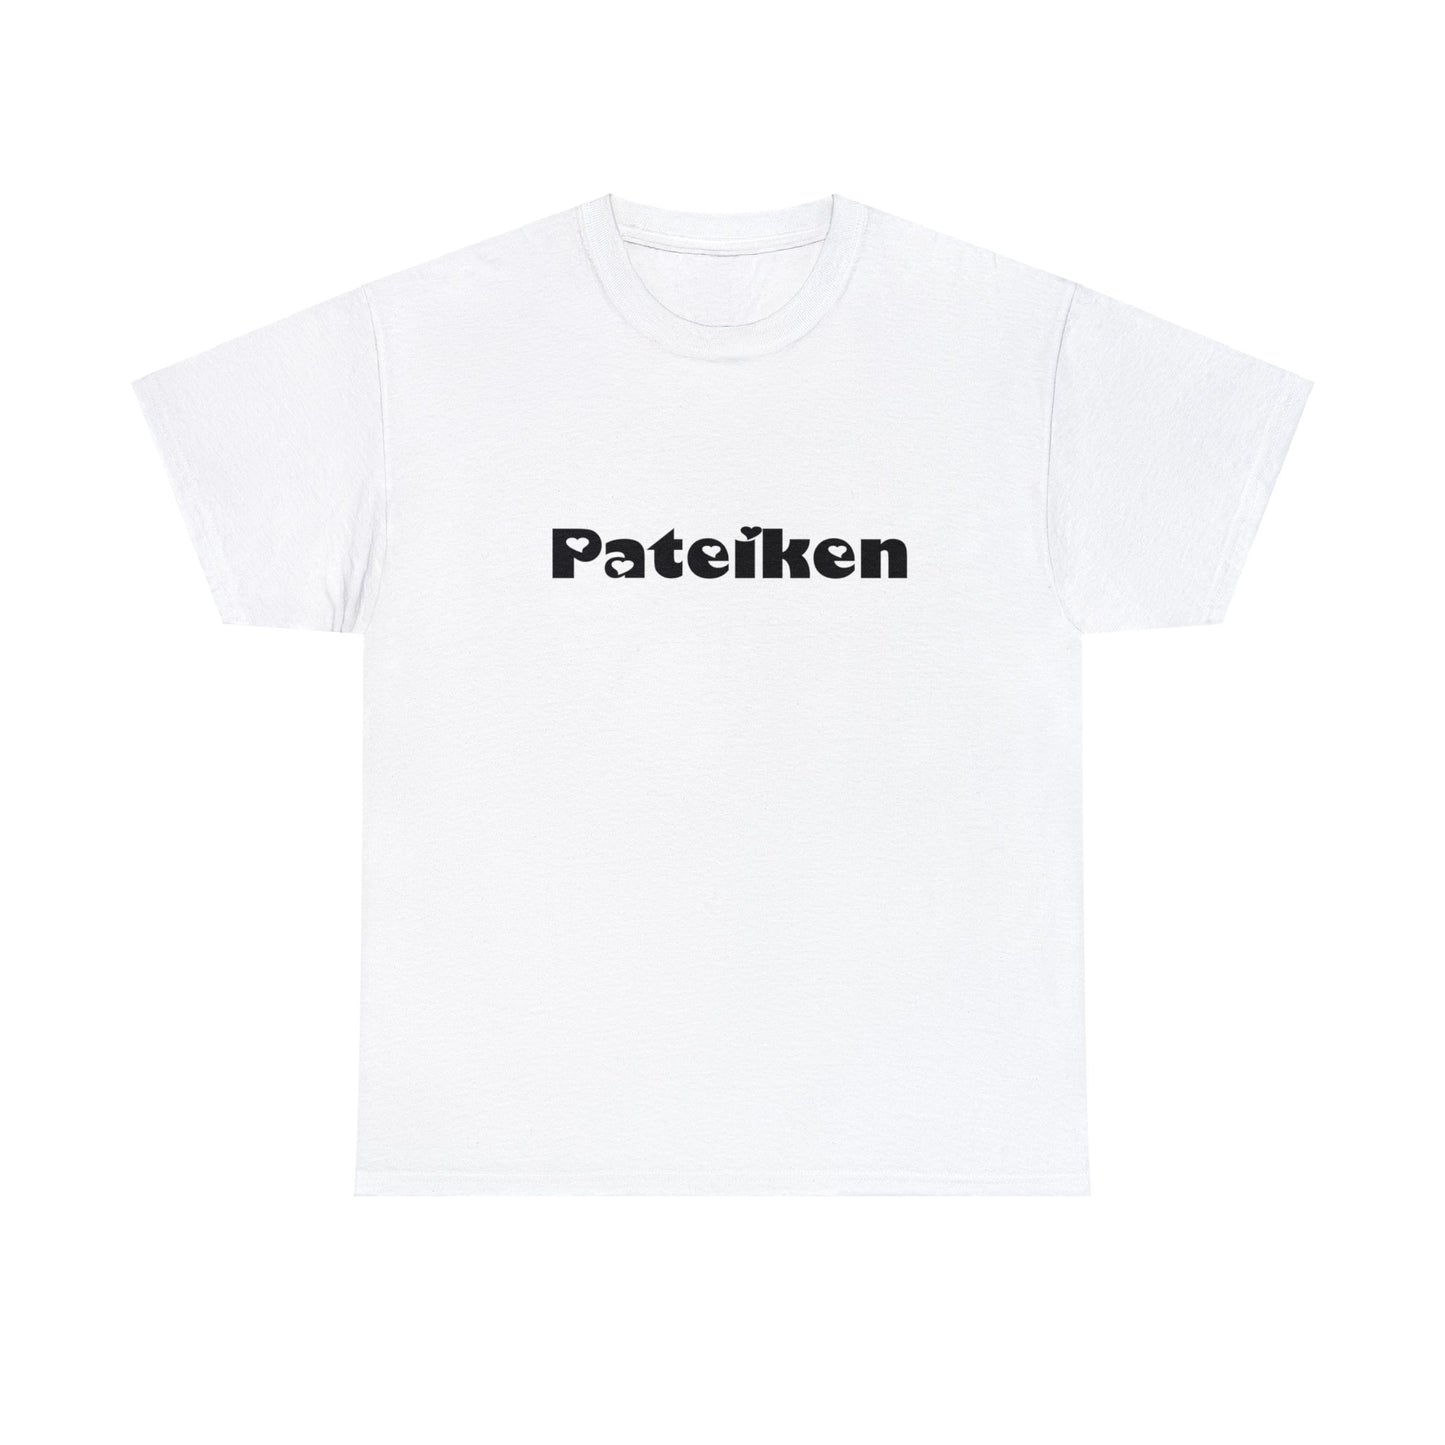 Int Oilsjters - Tshirt - Pateiken